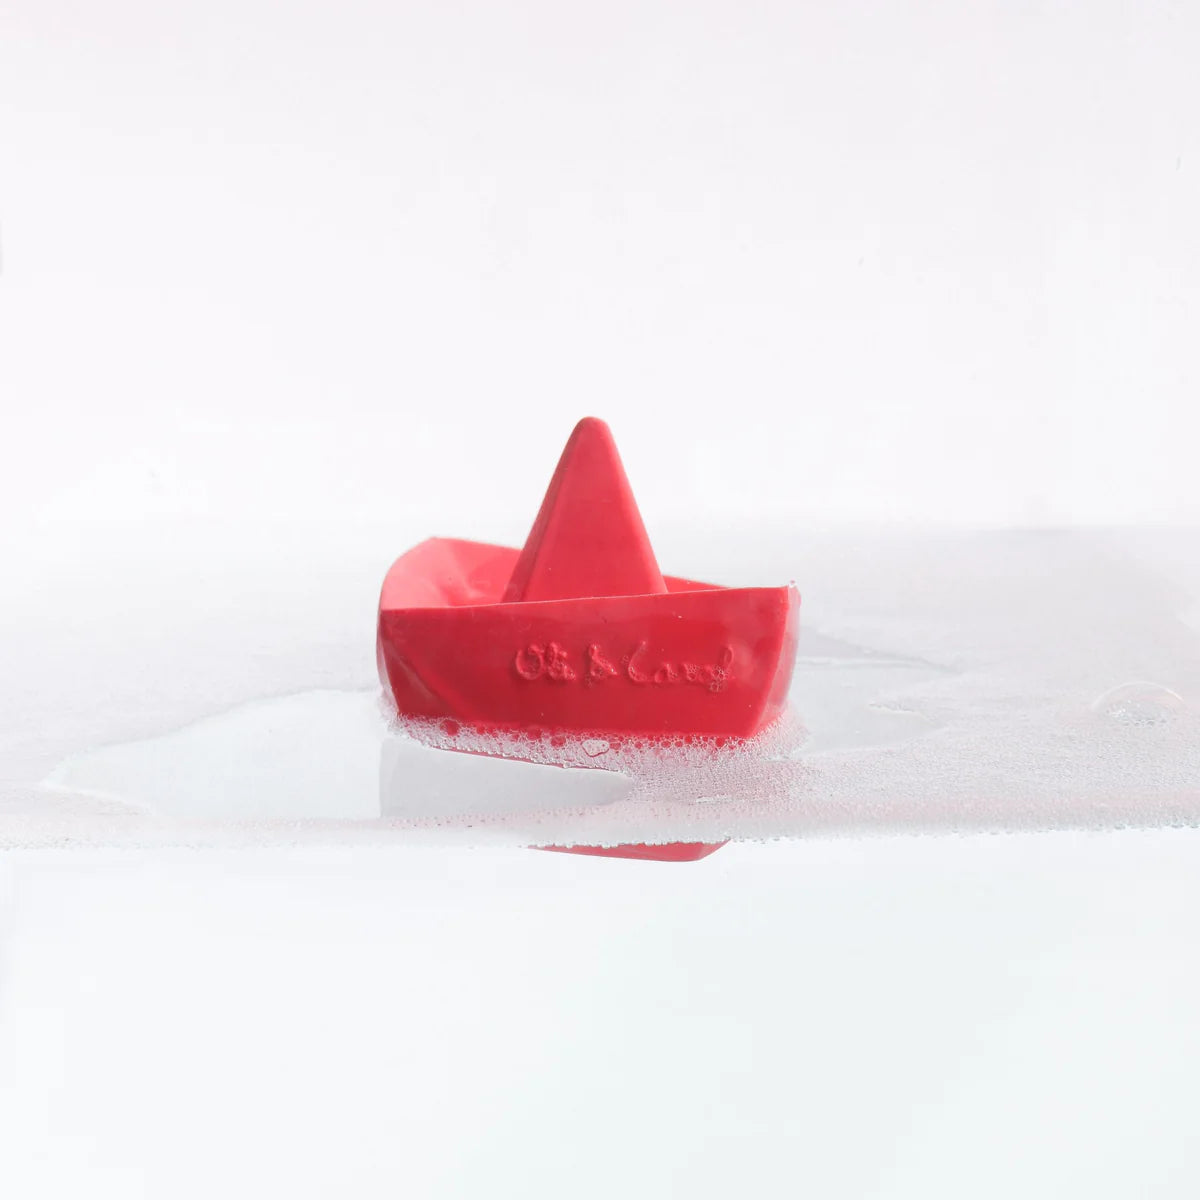 Origami Boat Bath Toy - Pink